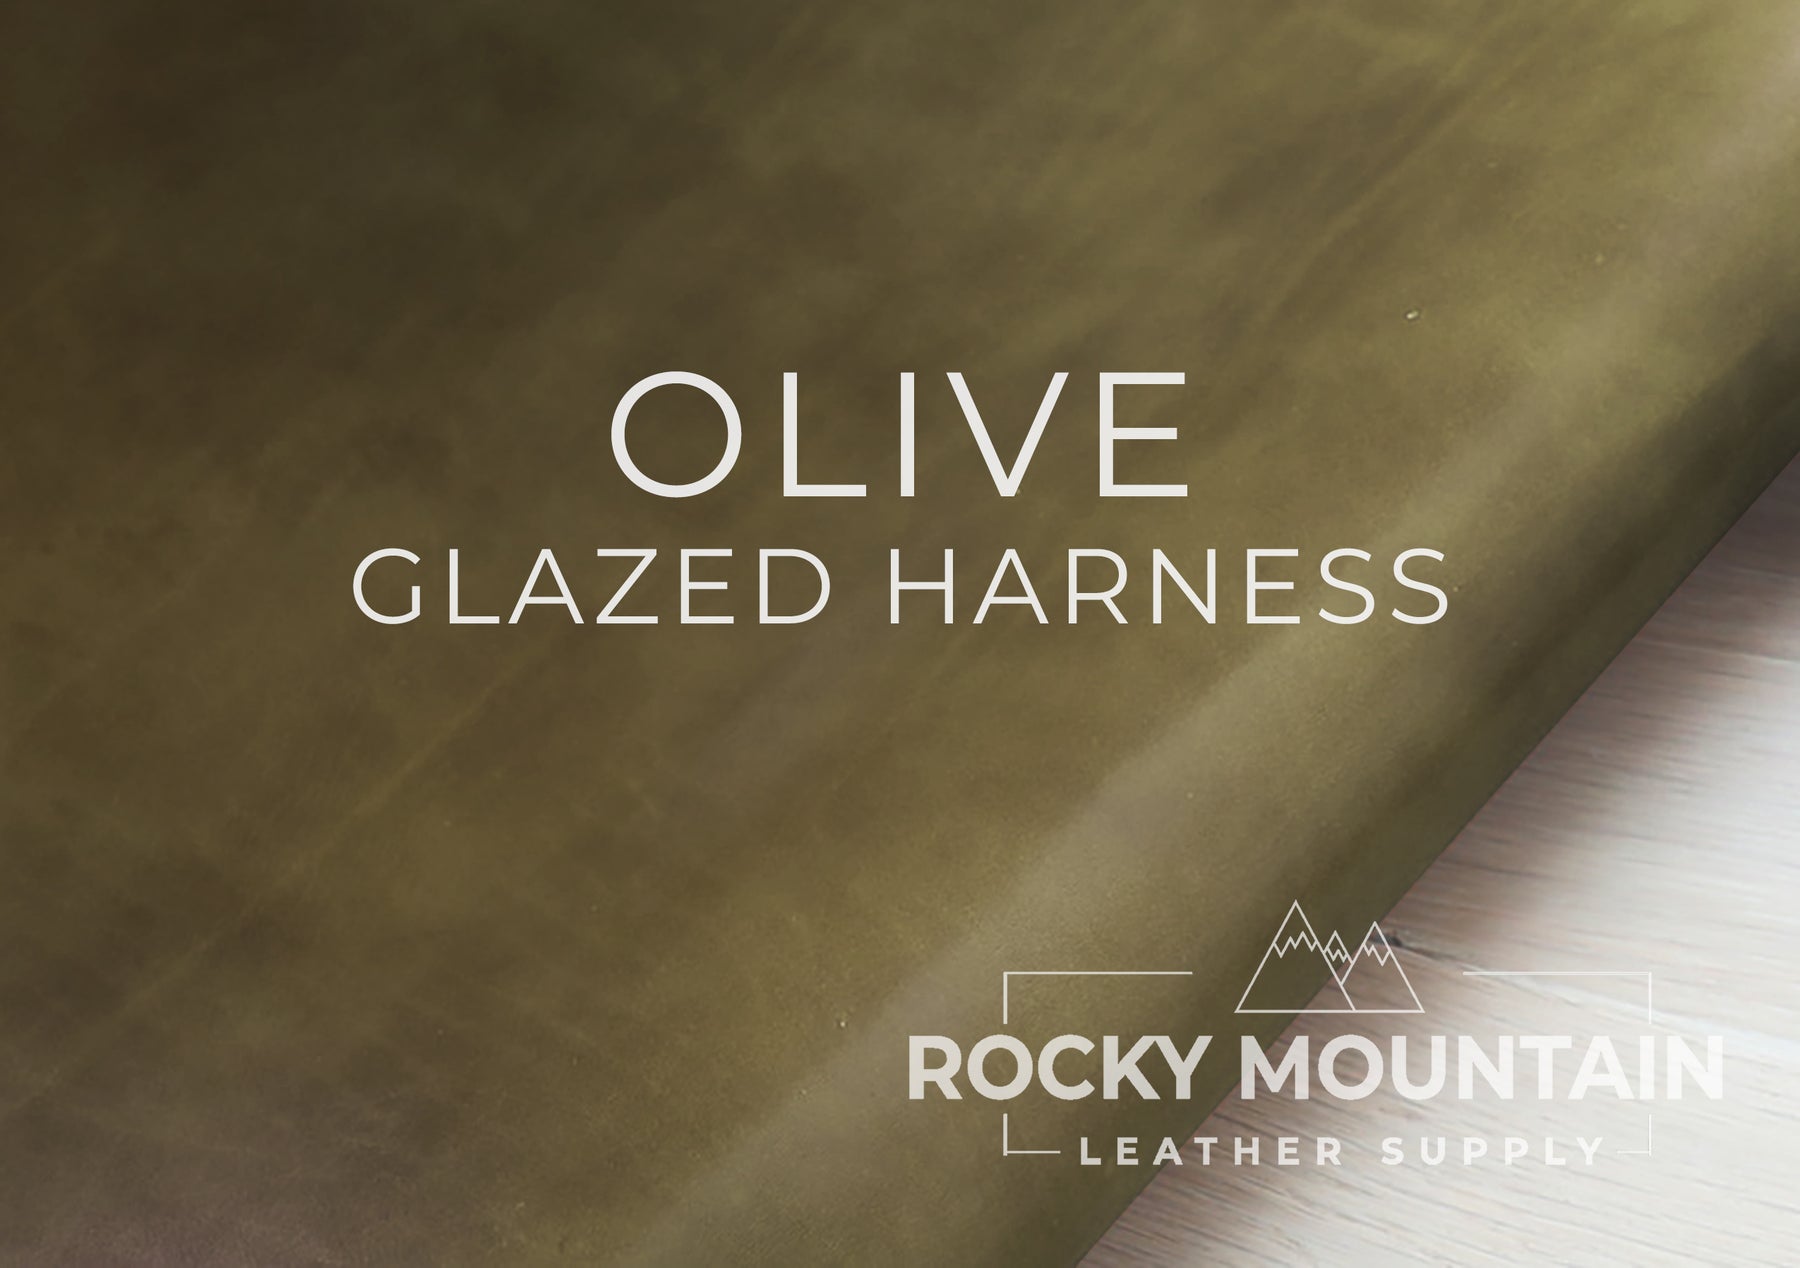 Wickett & Craig 🇺🇸 - Glazed Harness - Veg Tanned Leather (HIDES)